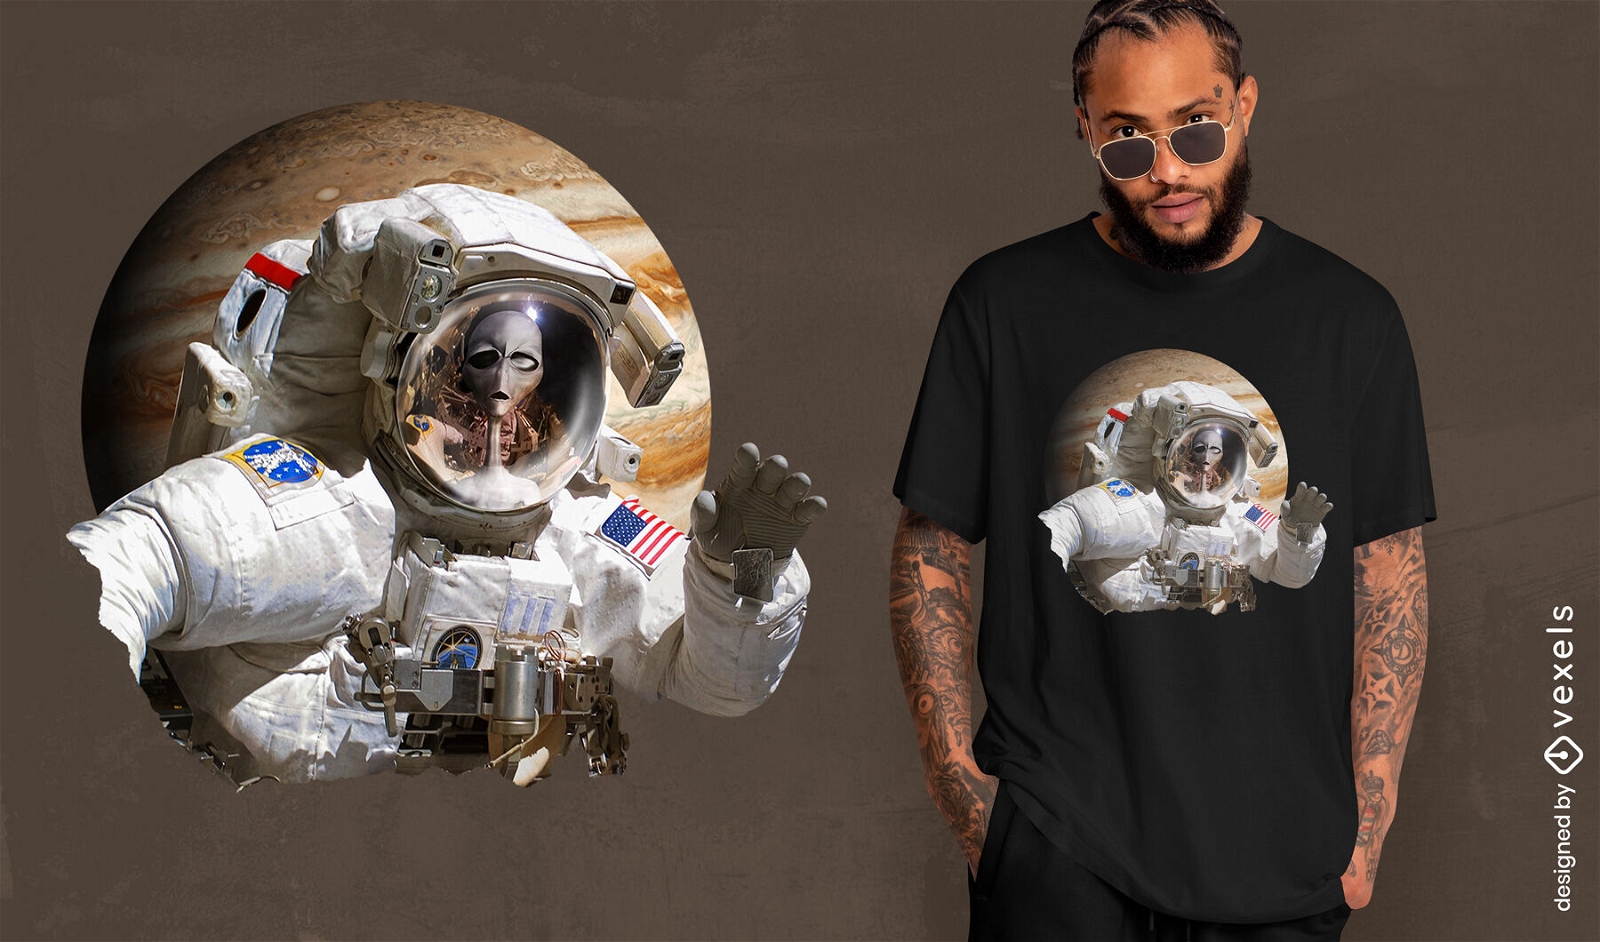 Dise?o de camiseta de planeta alien?gena astronauta